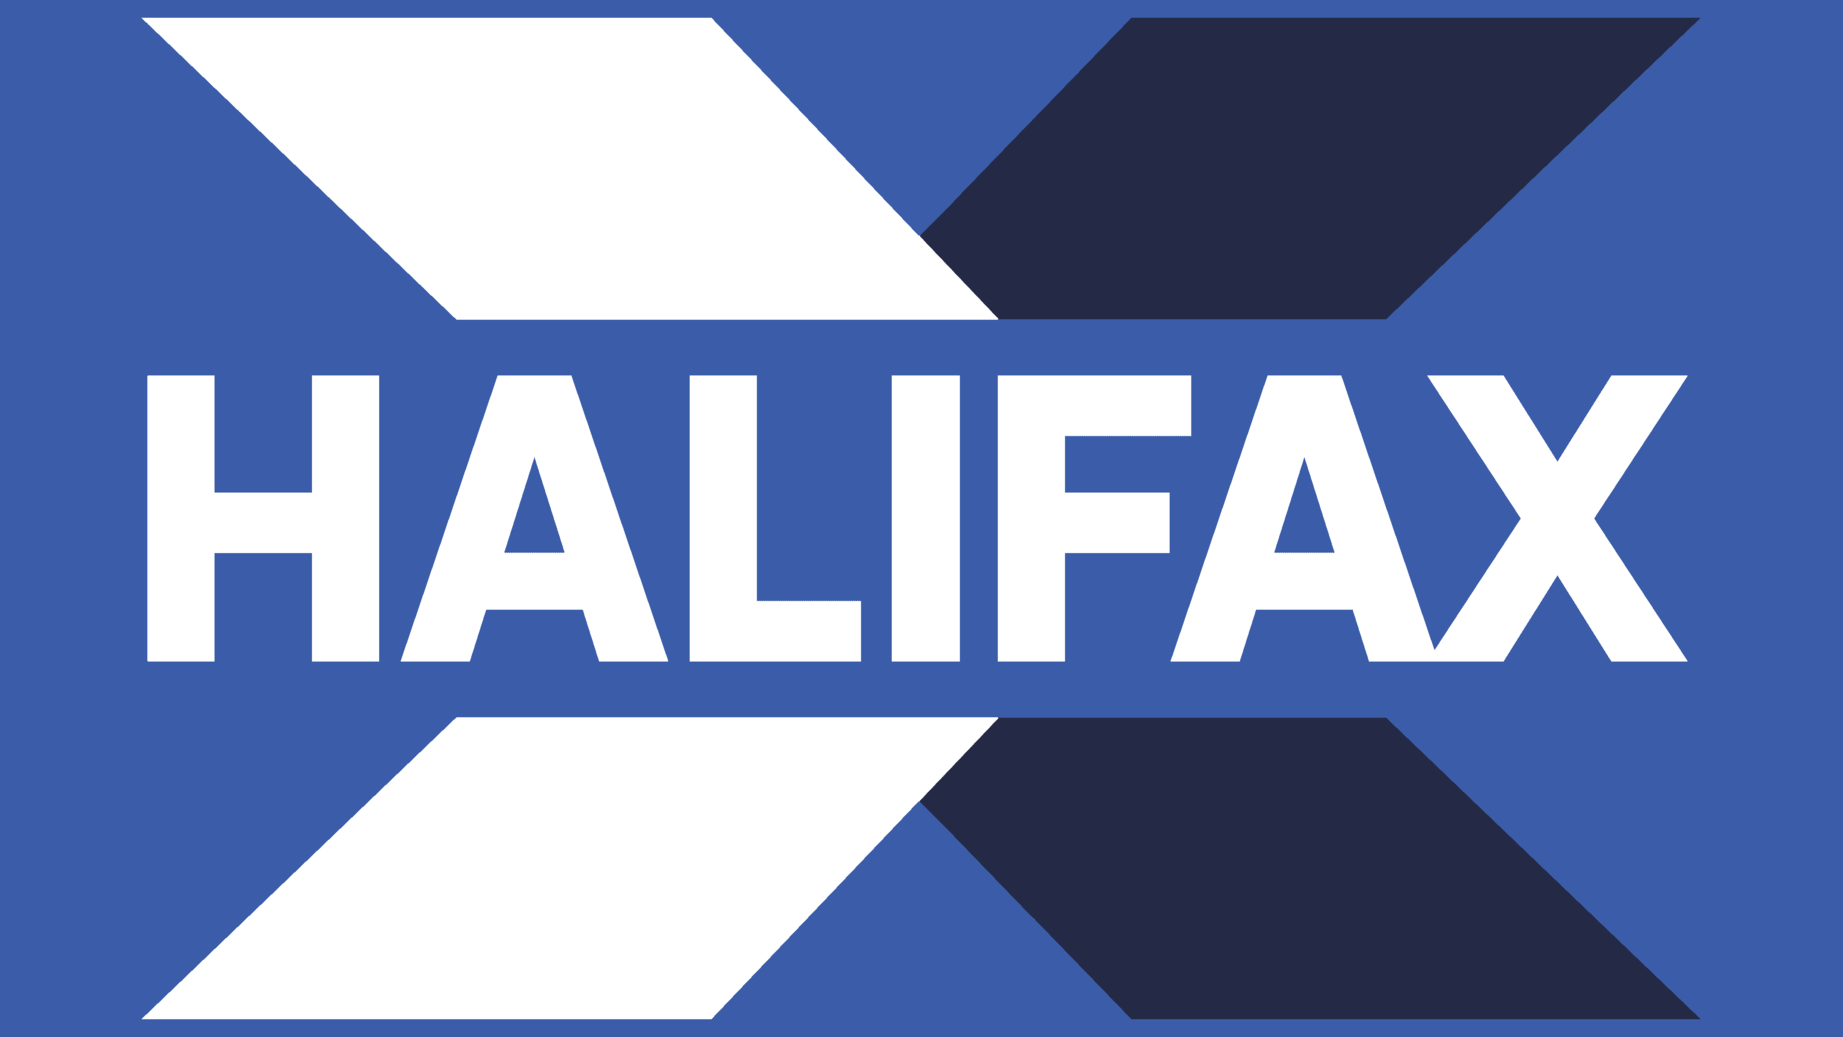 Halifax symbol